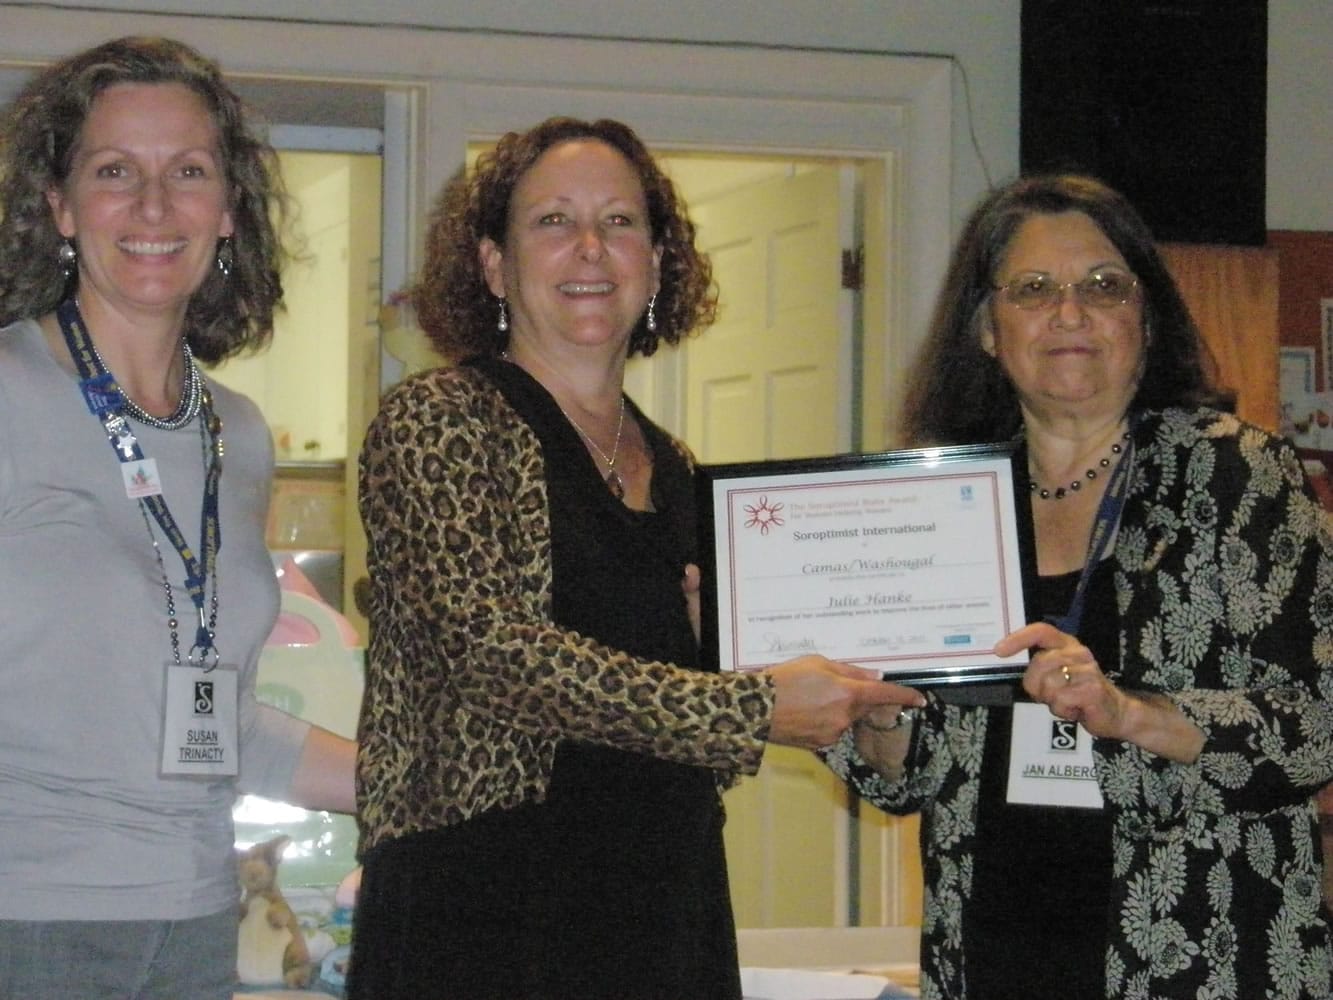 Soroptist International of Camas-Washougal president Susan Trinacty, left, presents Vida's Ark founder Julie Hanke the SICW Rudy Award with Jan Alberg.